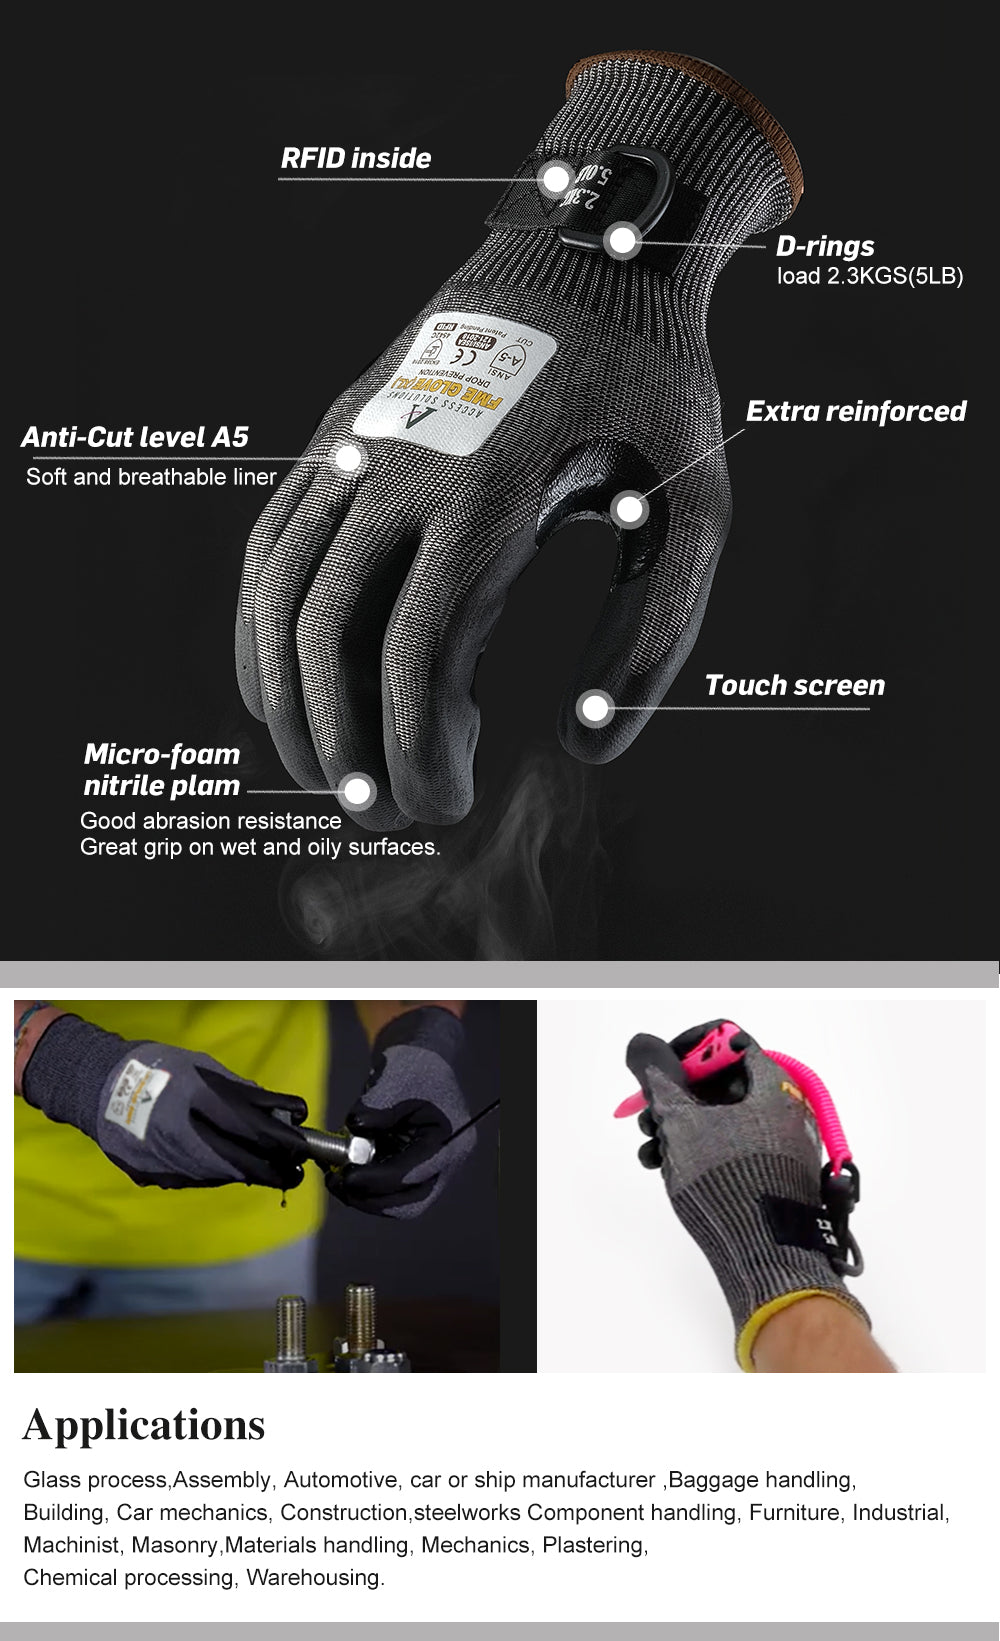 FME Gloves XL